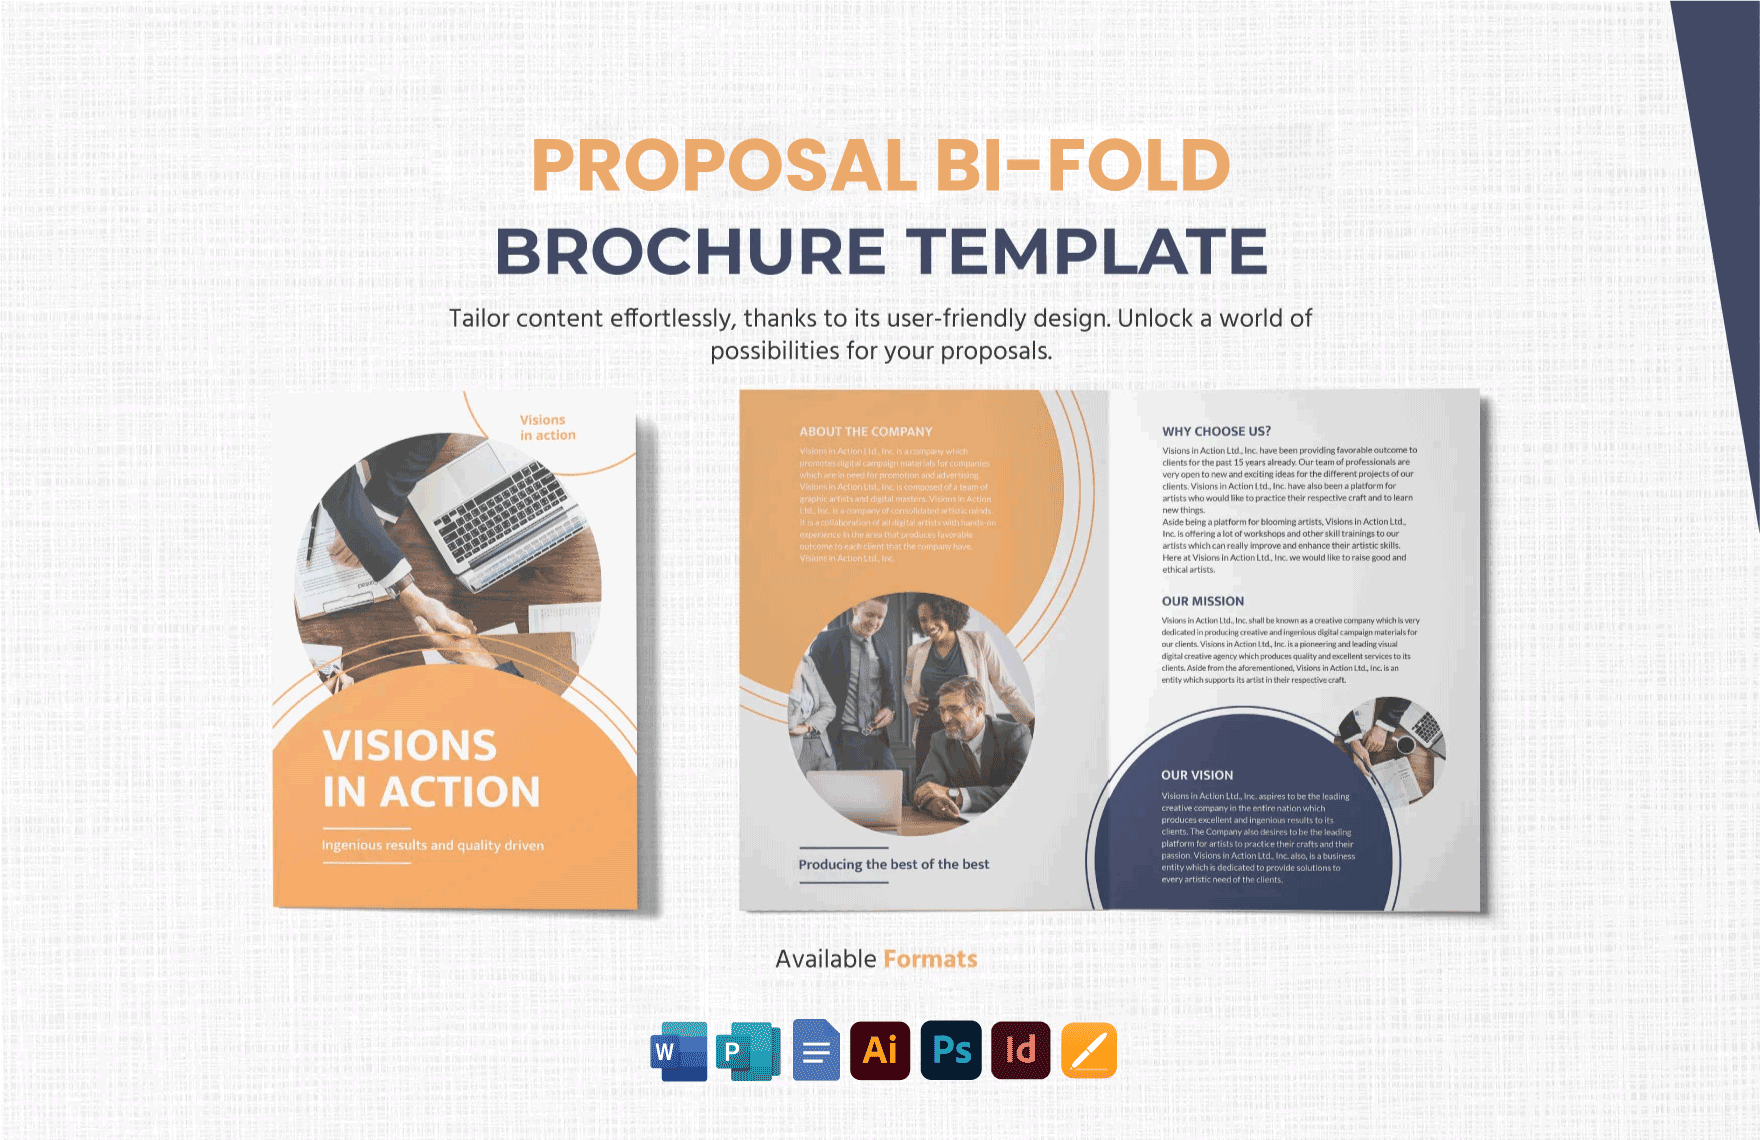 Proposal Bi-Fold Brochure Template in Word, Google Docs, Illustrator, PSD, Apple Pages, Publisher, InDesign